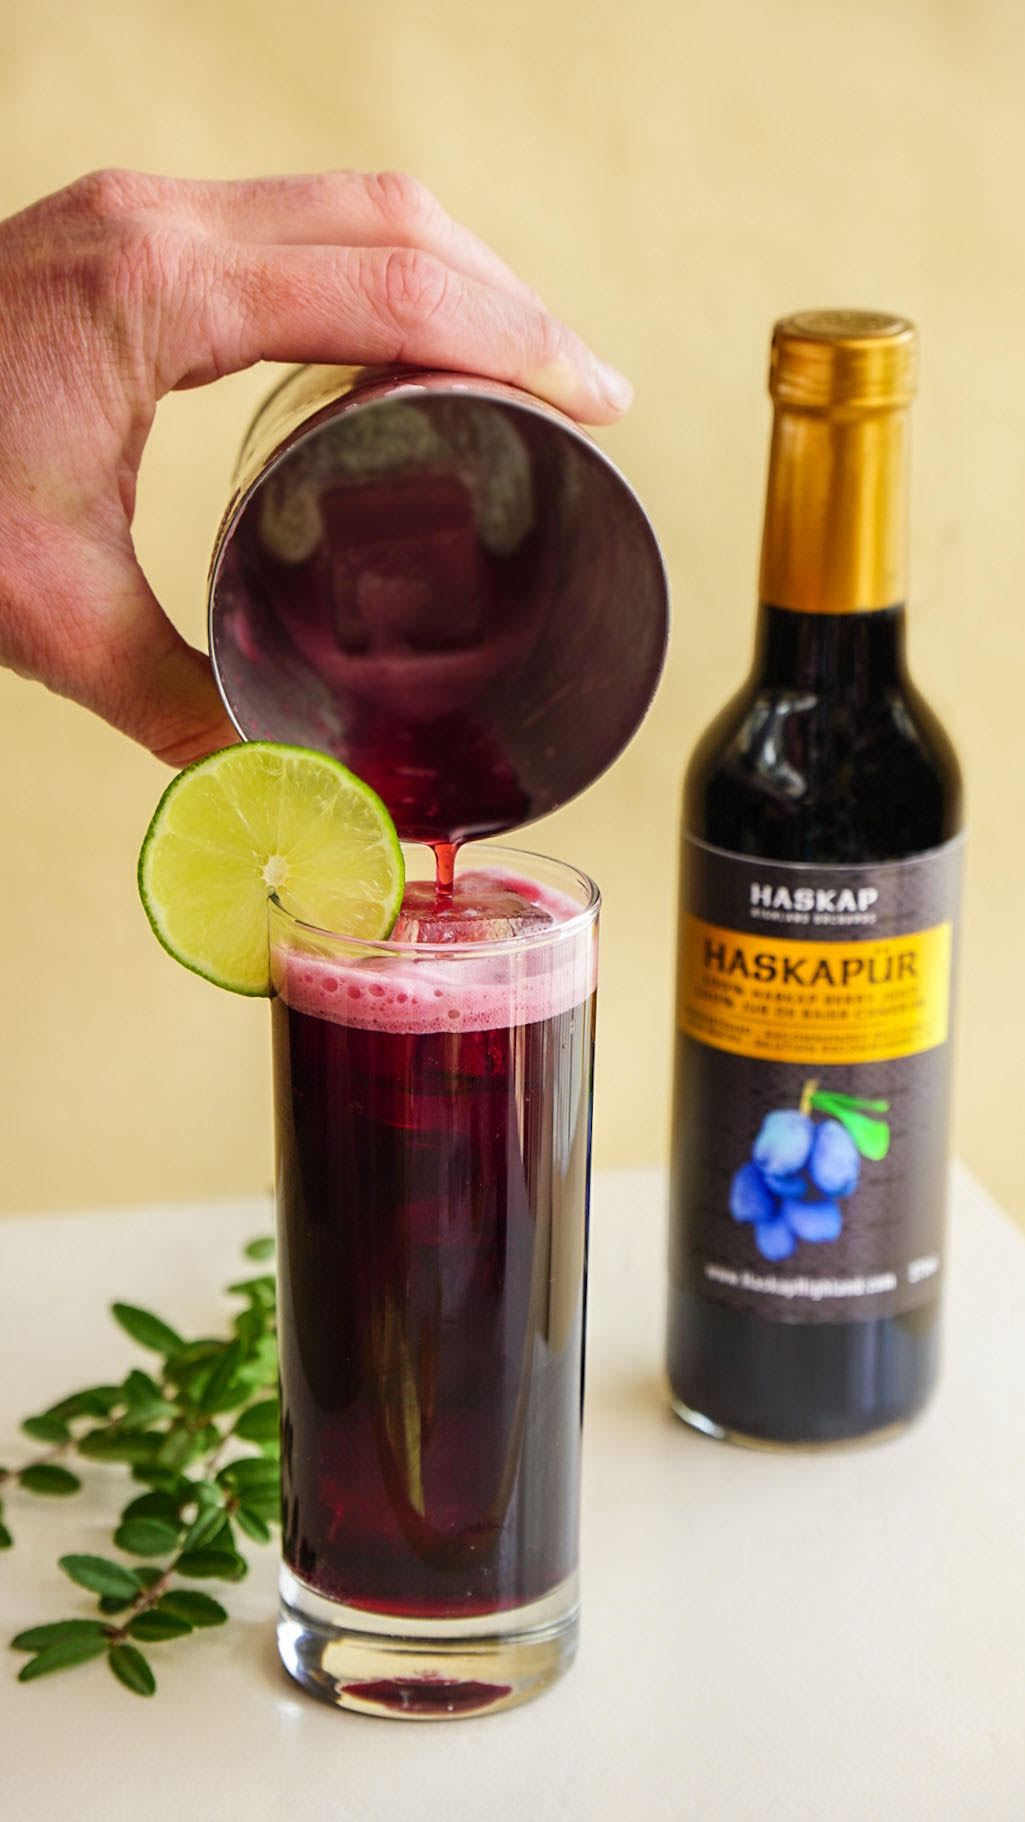 Haskap Pure Intentions Mocktail with bottle of Haskapur pure Haskap juice